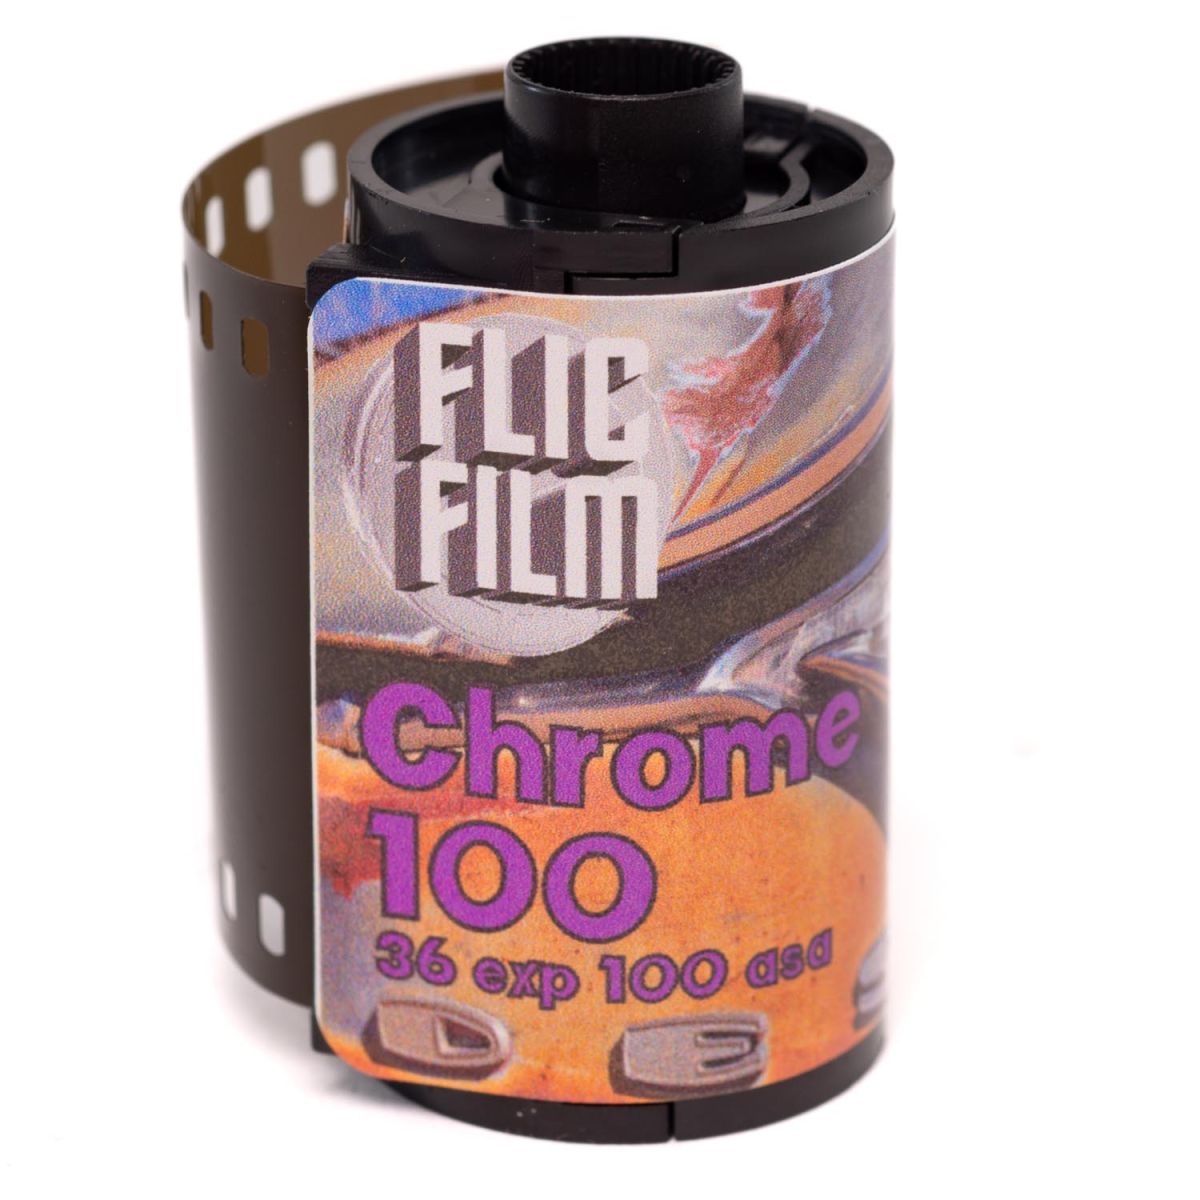 Flic Film Chrome 100 135-36